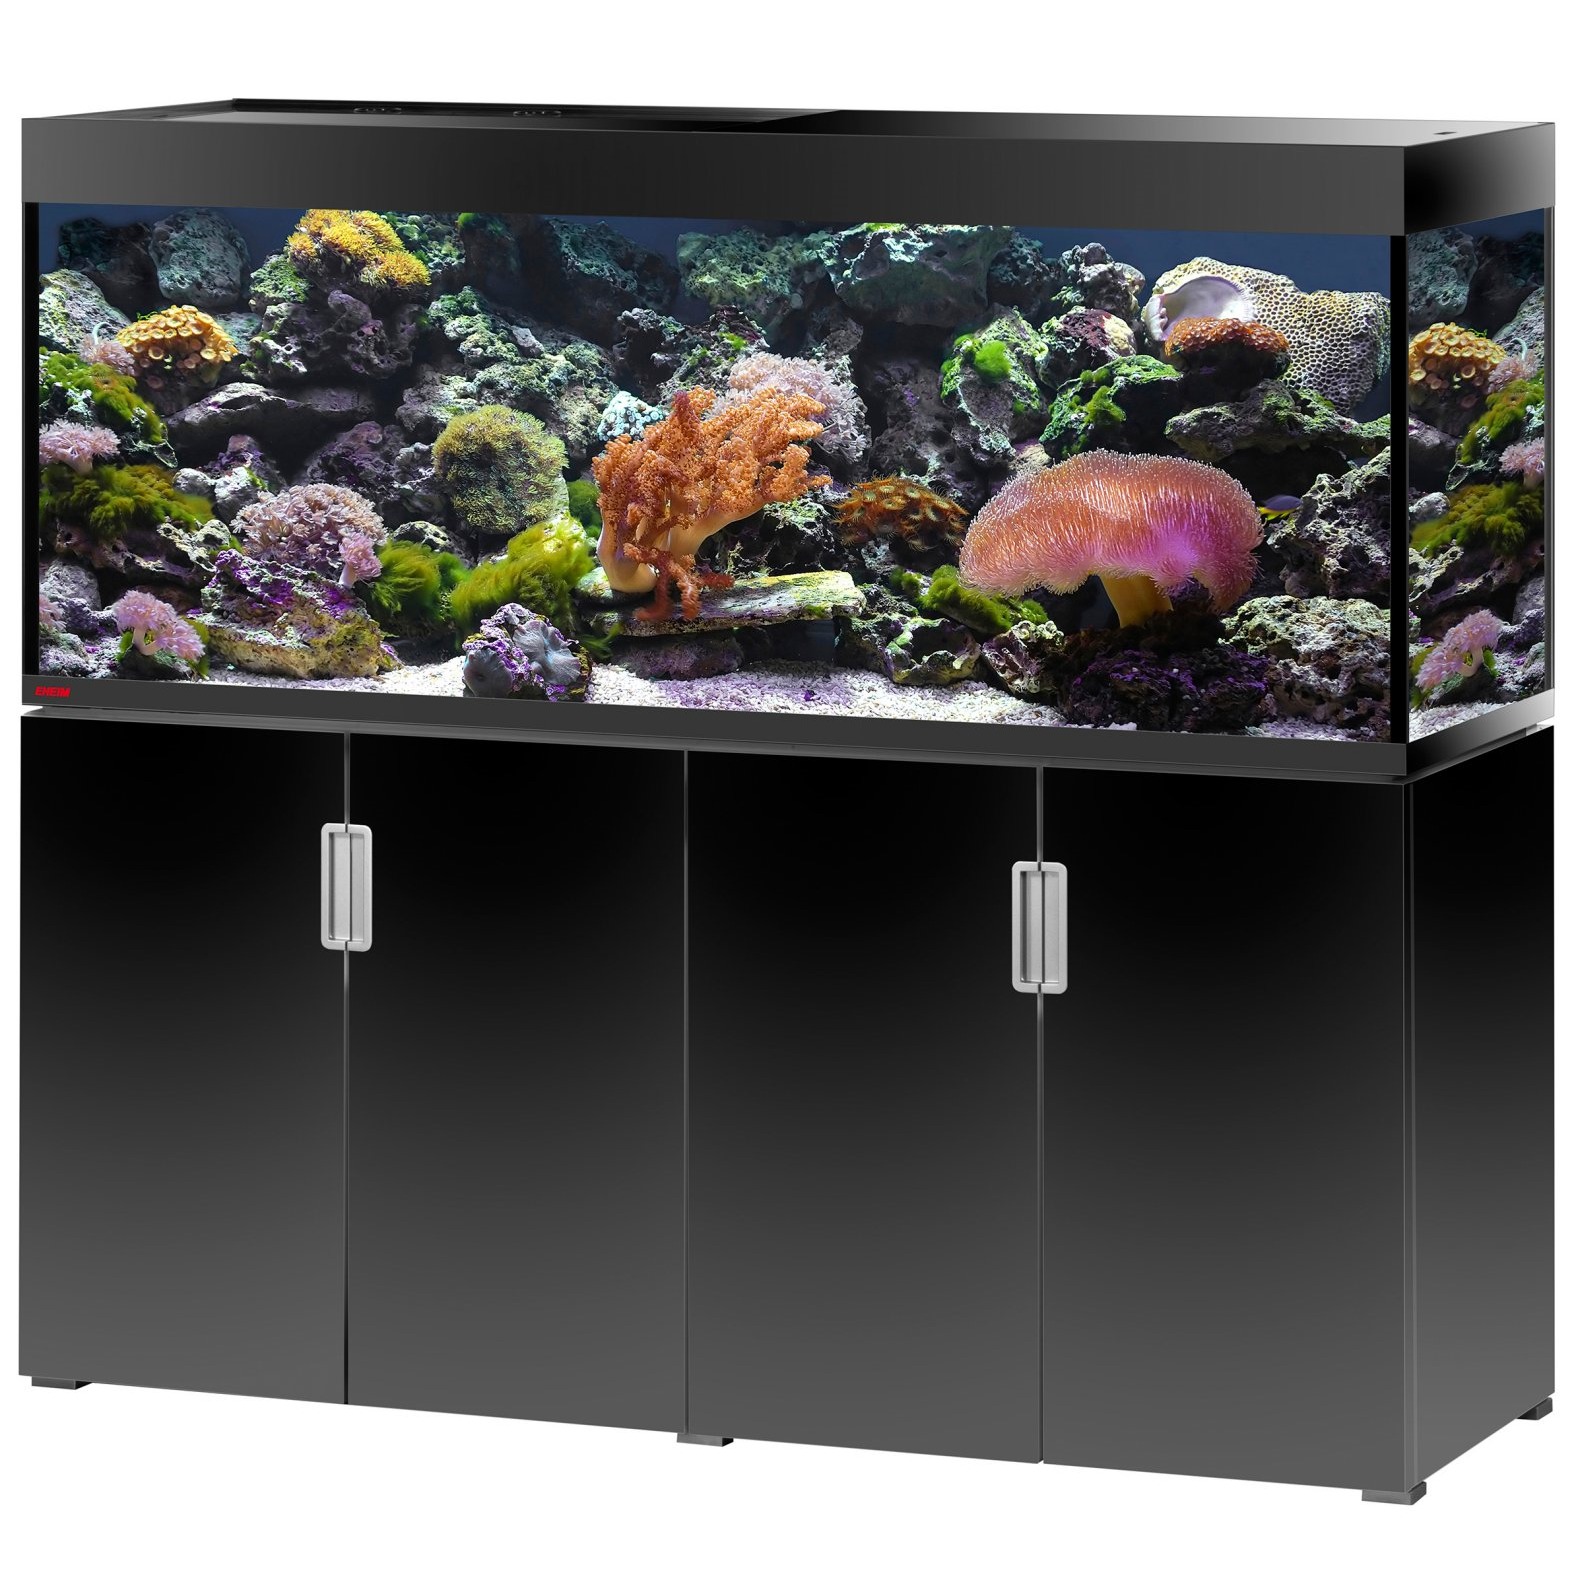 eheim-incpiria-marine-500-led-noir-brillant-kit-aquarium-160-cm-500-l-avec-meuble-et-eclairage-leds